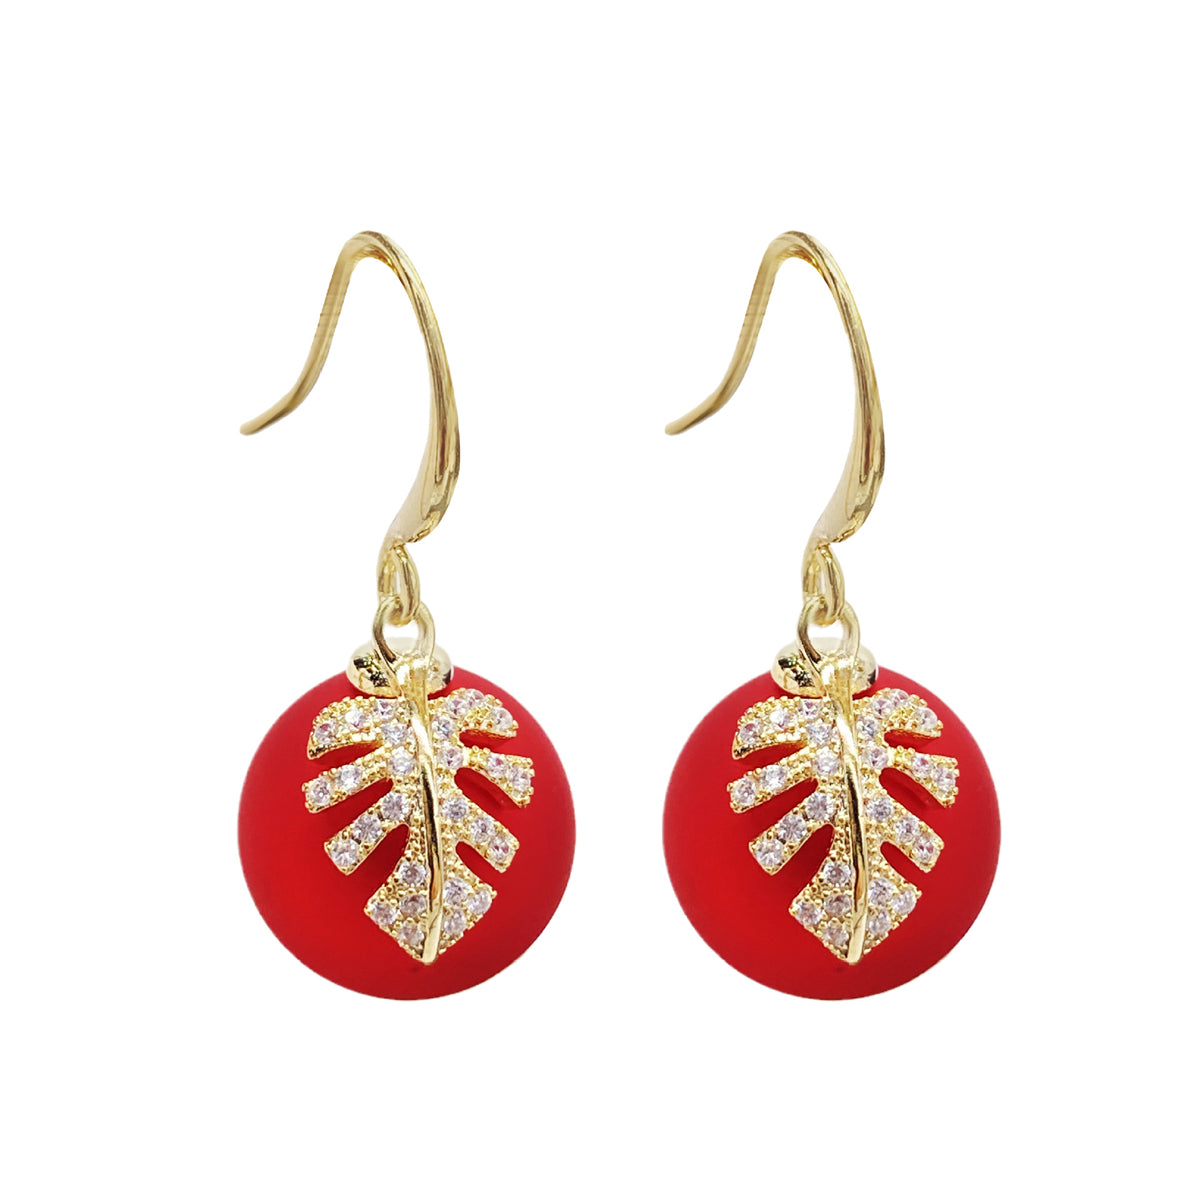 Red Resin & Clear Cubic Zirconia Leaf Ball Drop Earrings